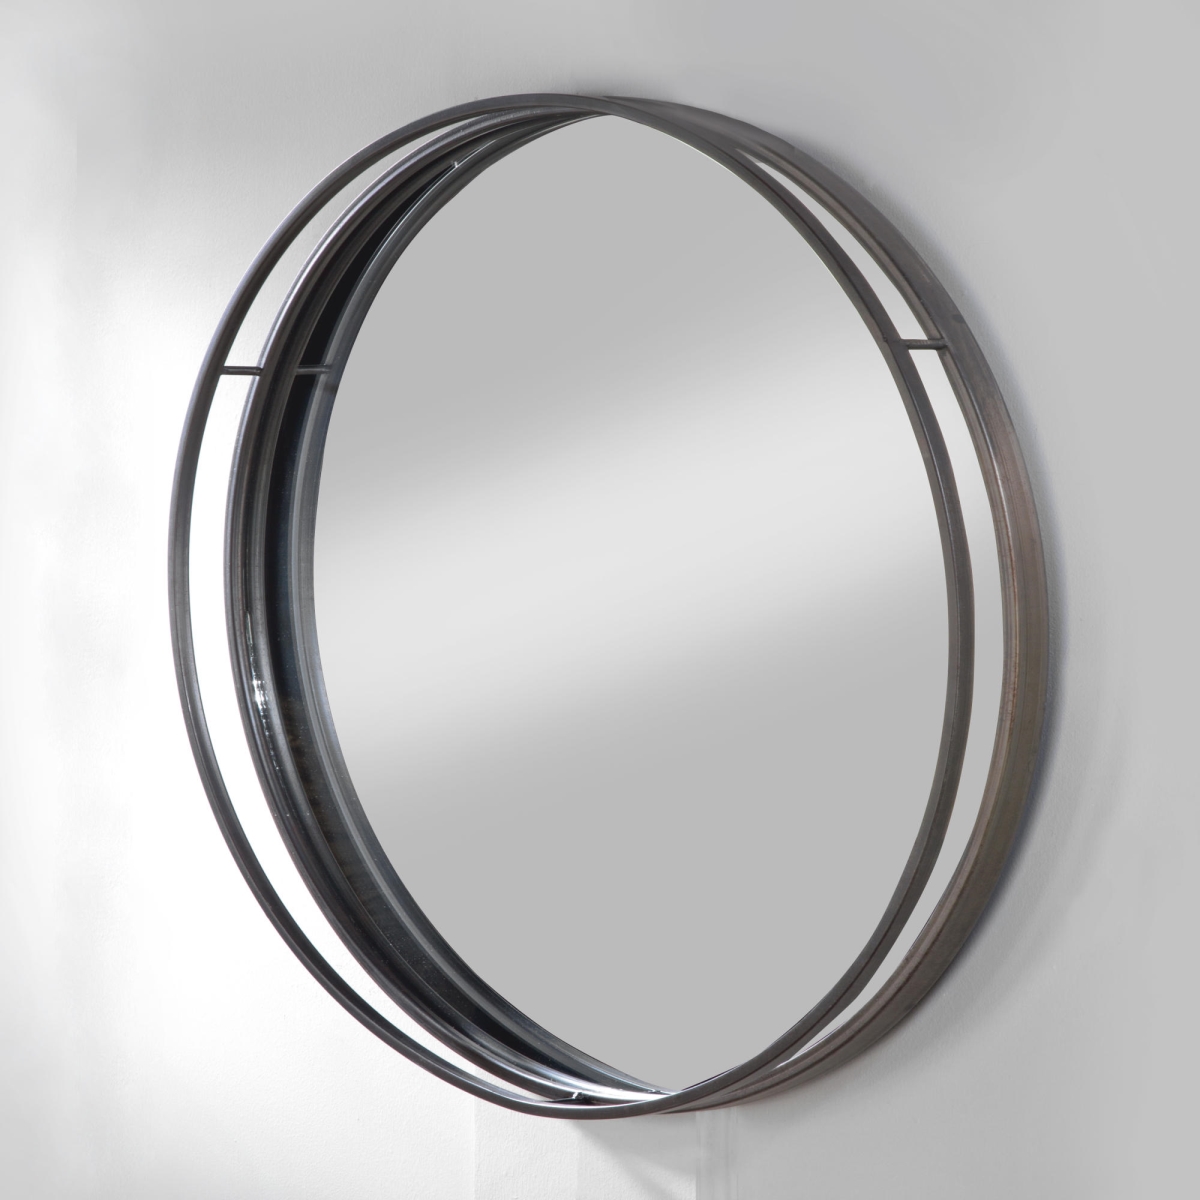 Picture of Tripar 20563 Metal Decorative Round Wall Mirror, Black